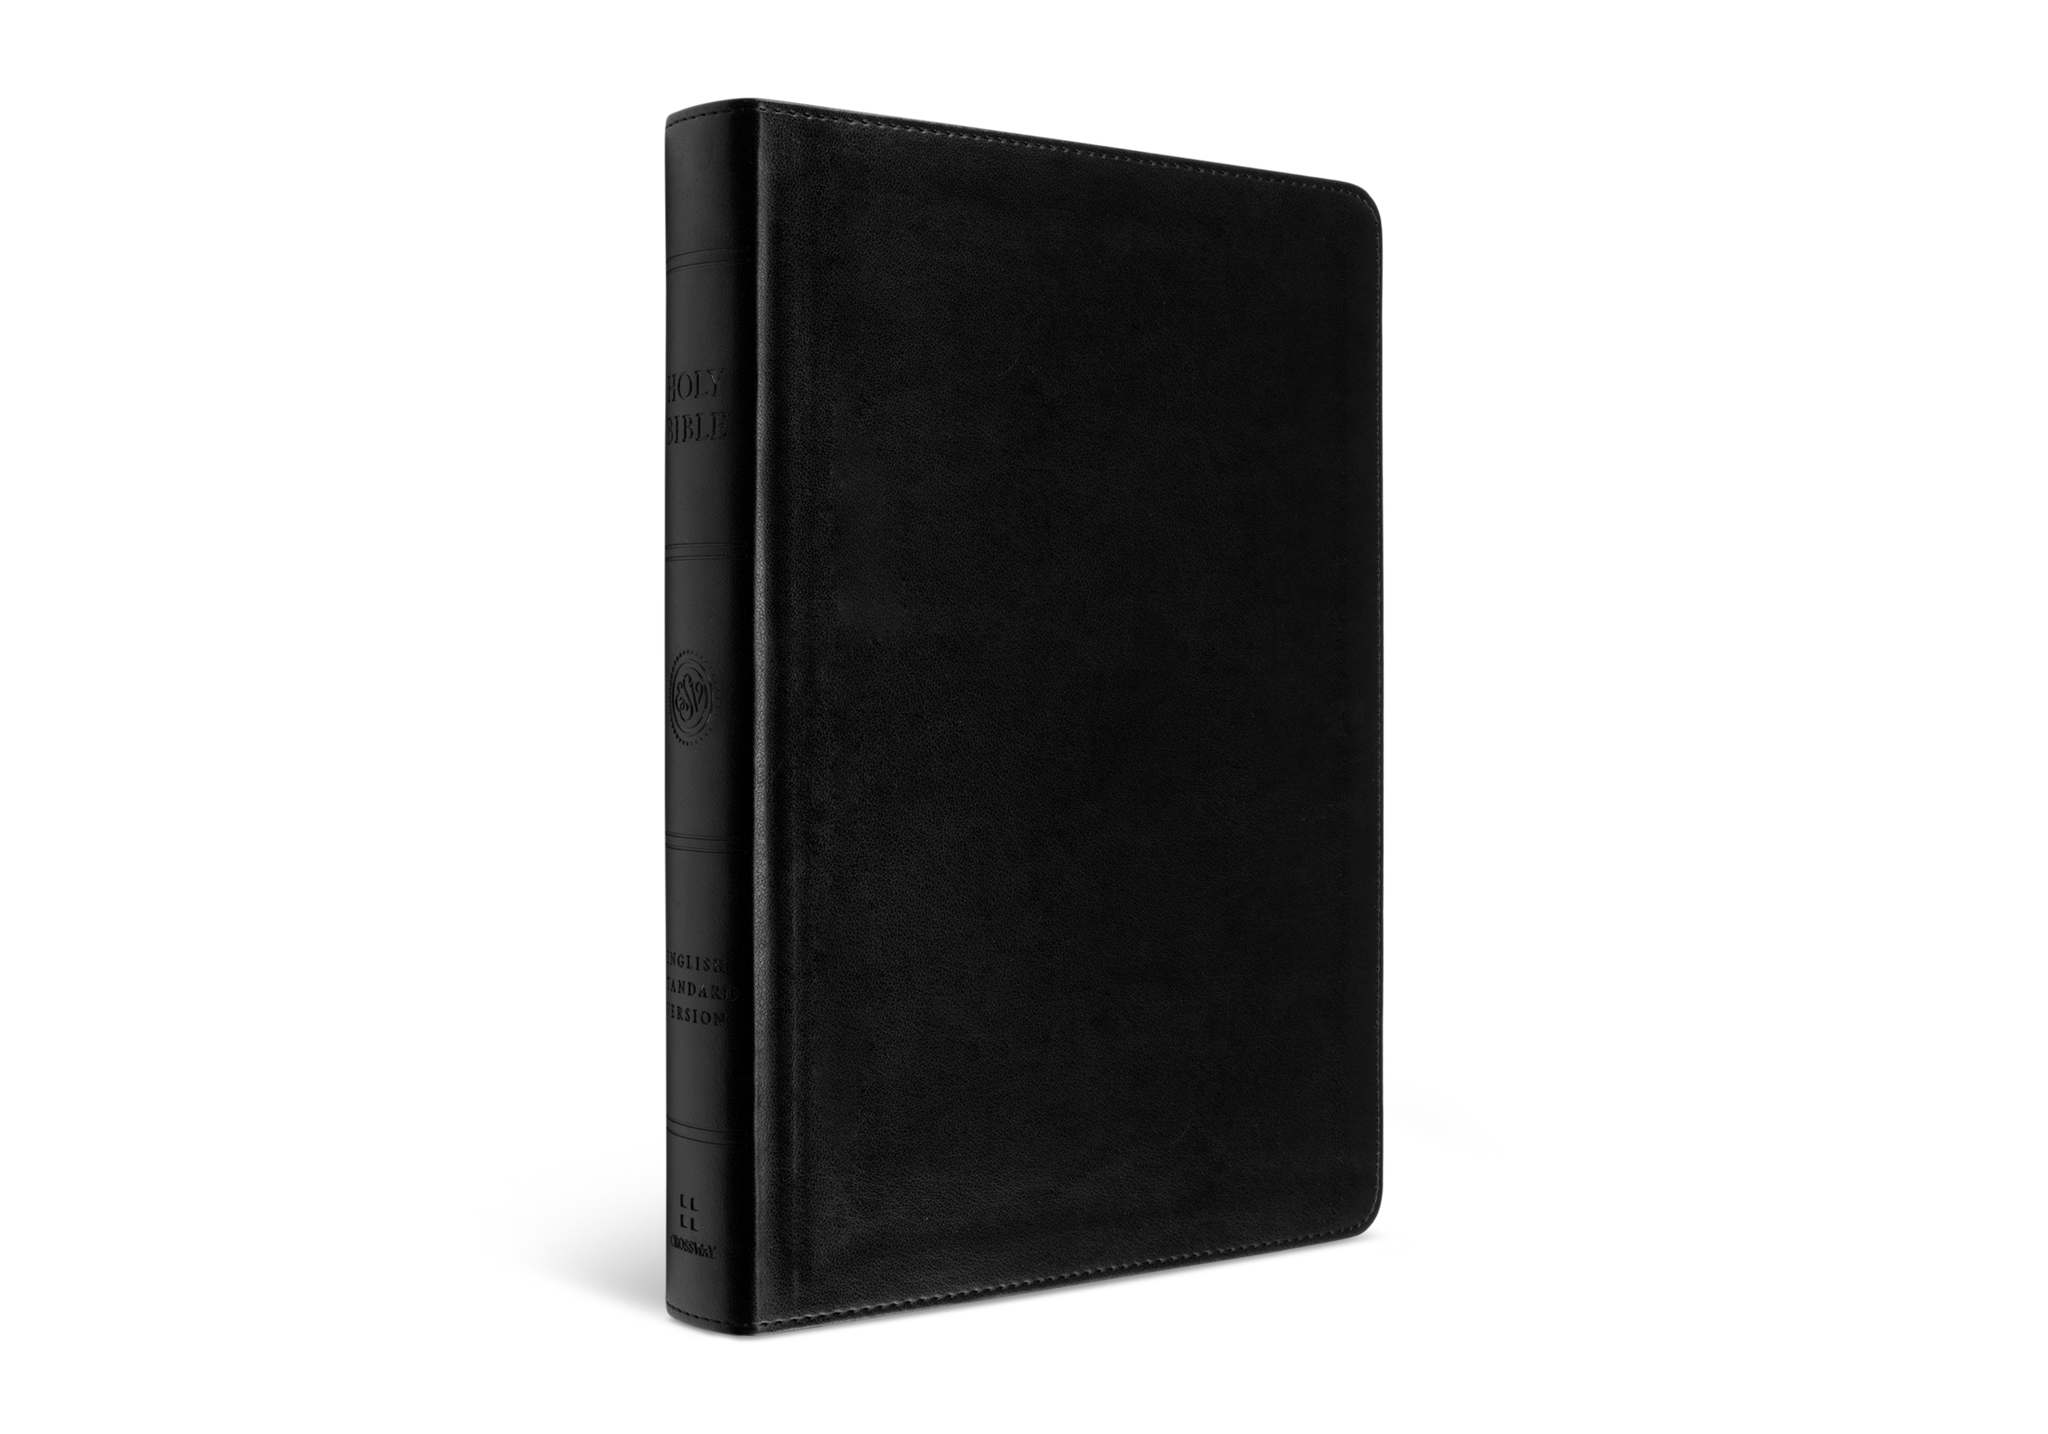 ESV Large Print Bible - Black